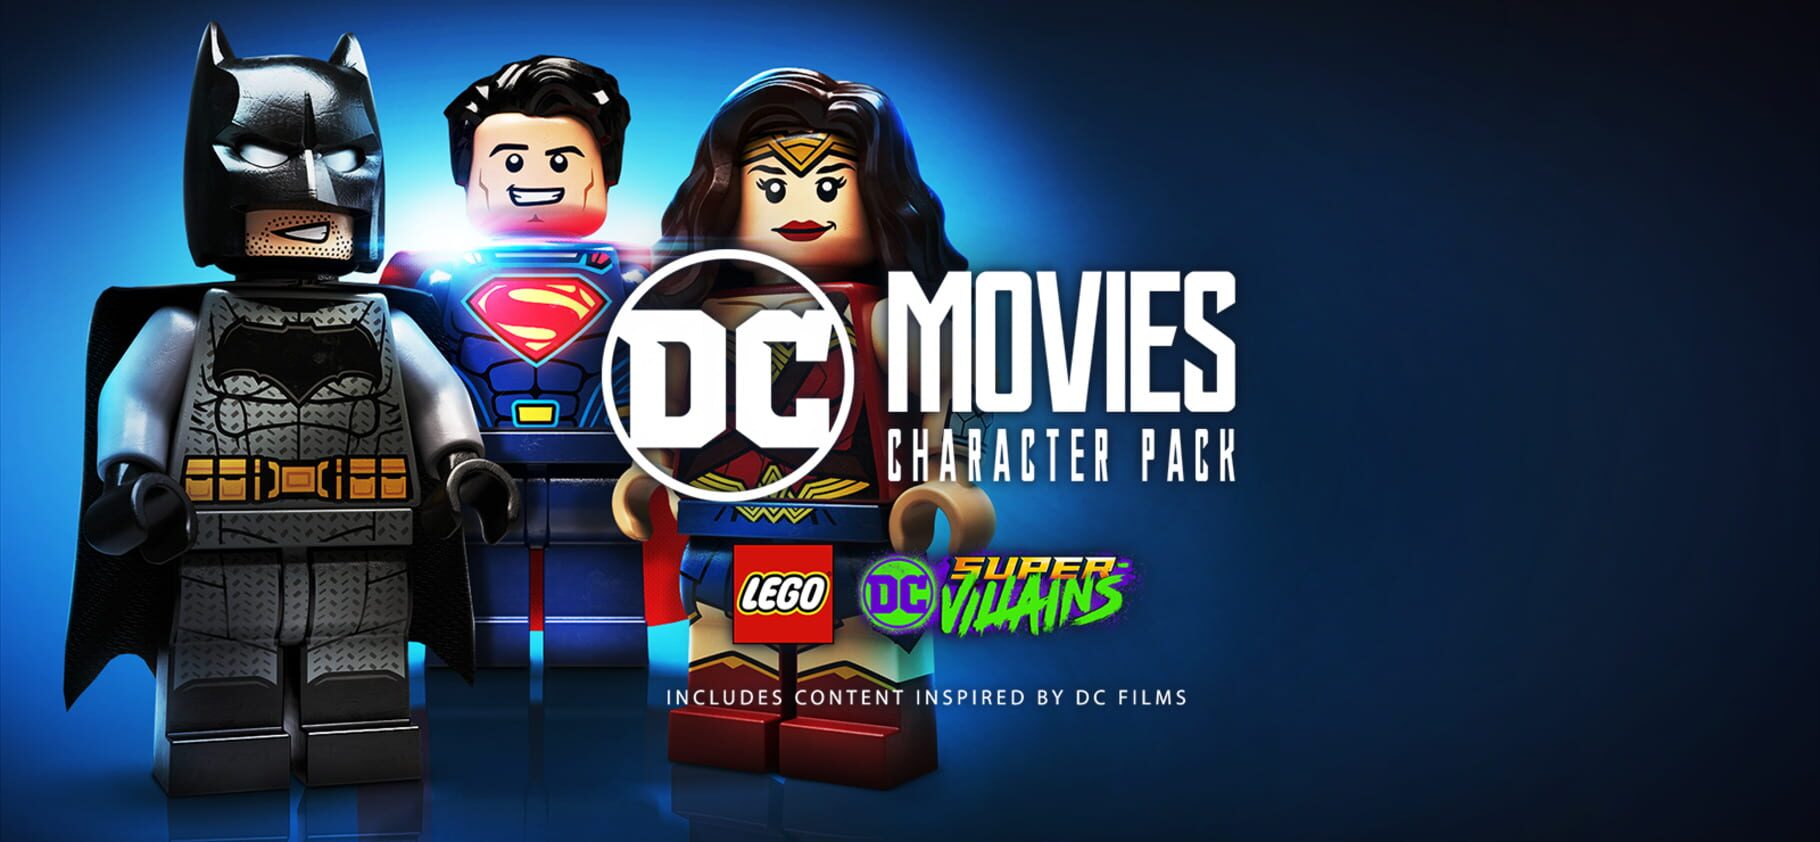 Arte - LEGO DC Super-Villains: DC Movies Character Pack